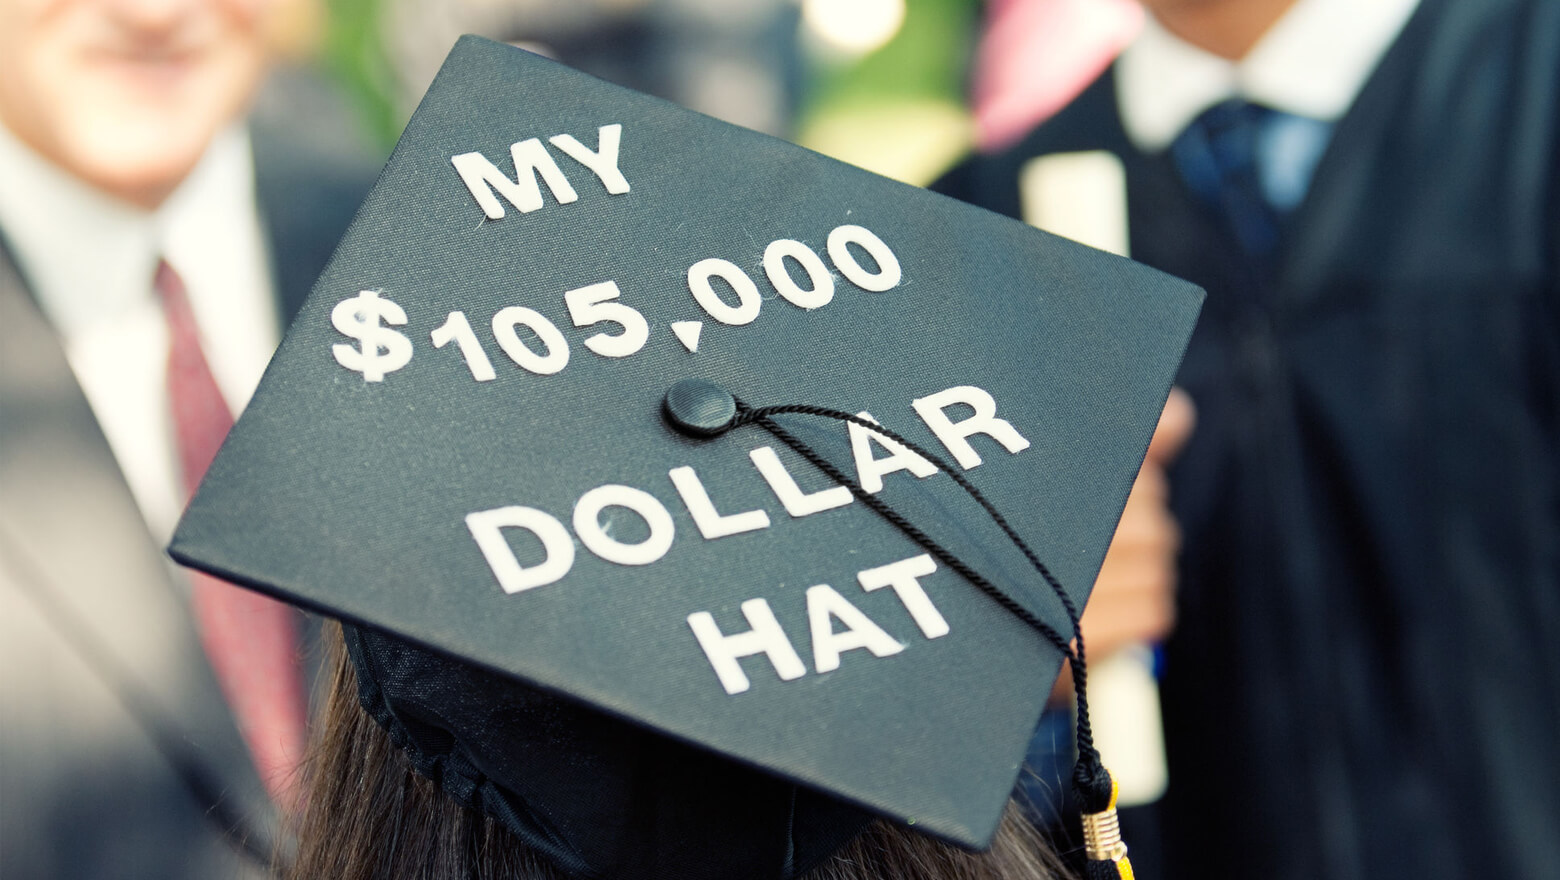 Student's loans. Student debt. Cancel student debt. Student loan. About student loan debt.